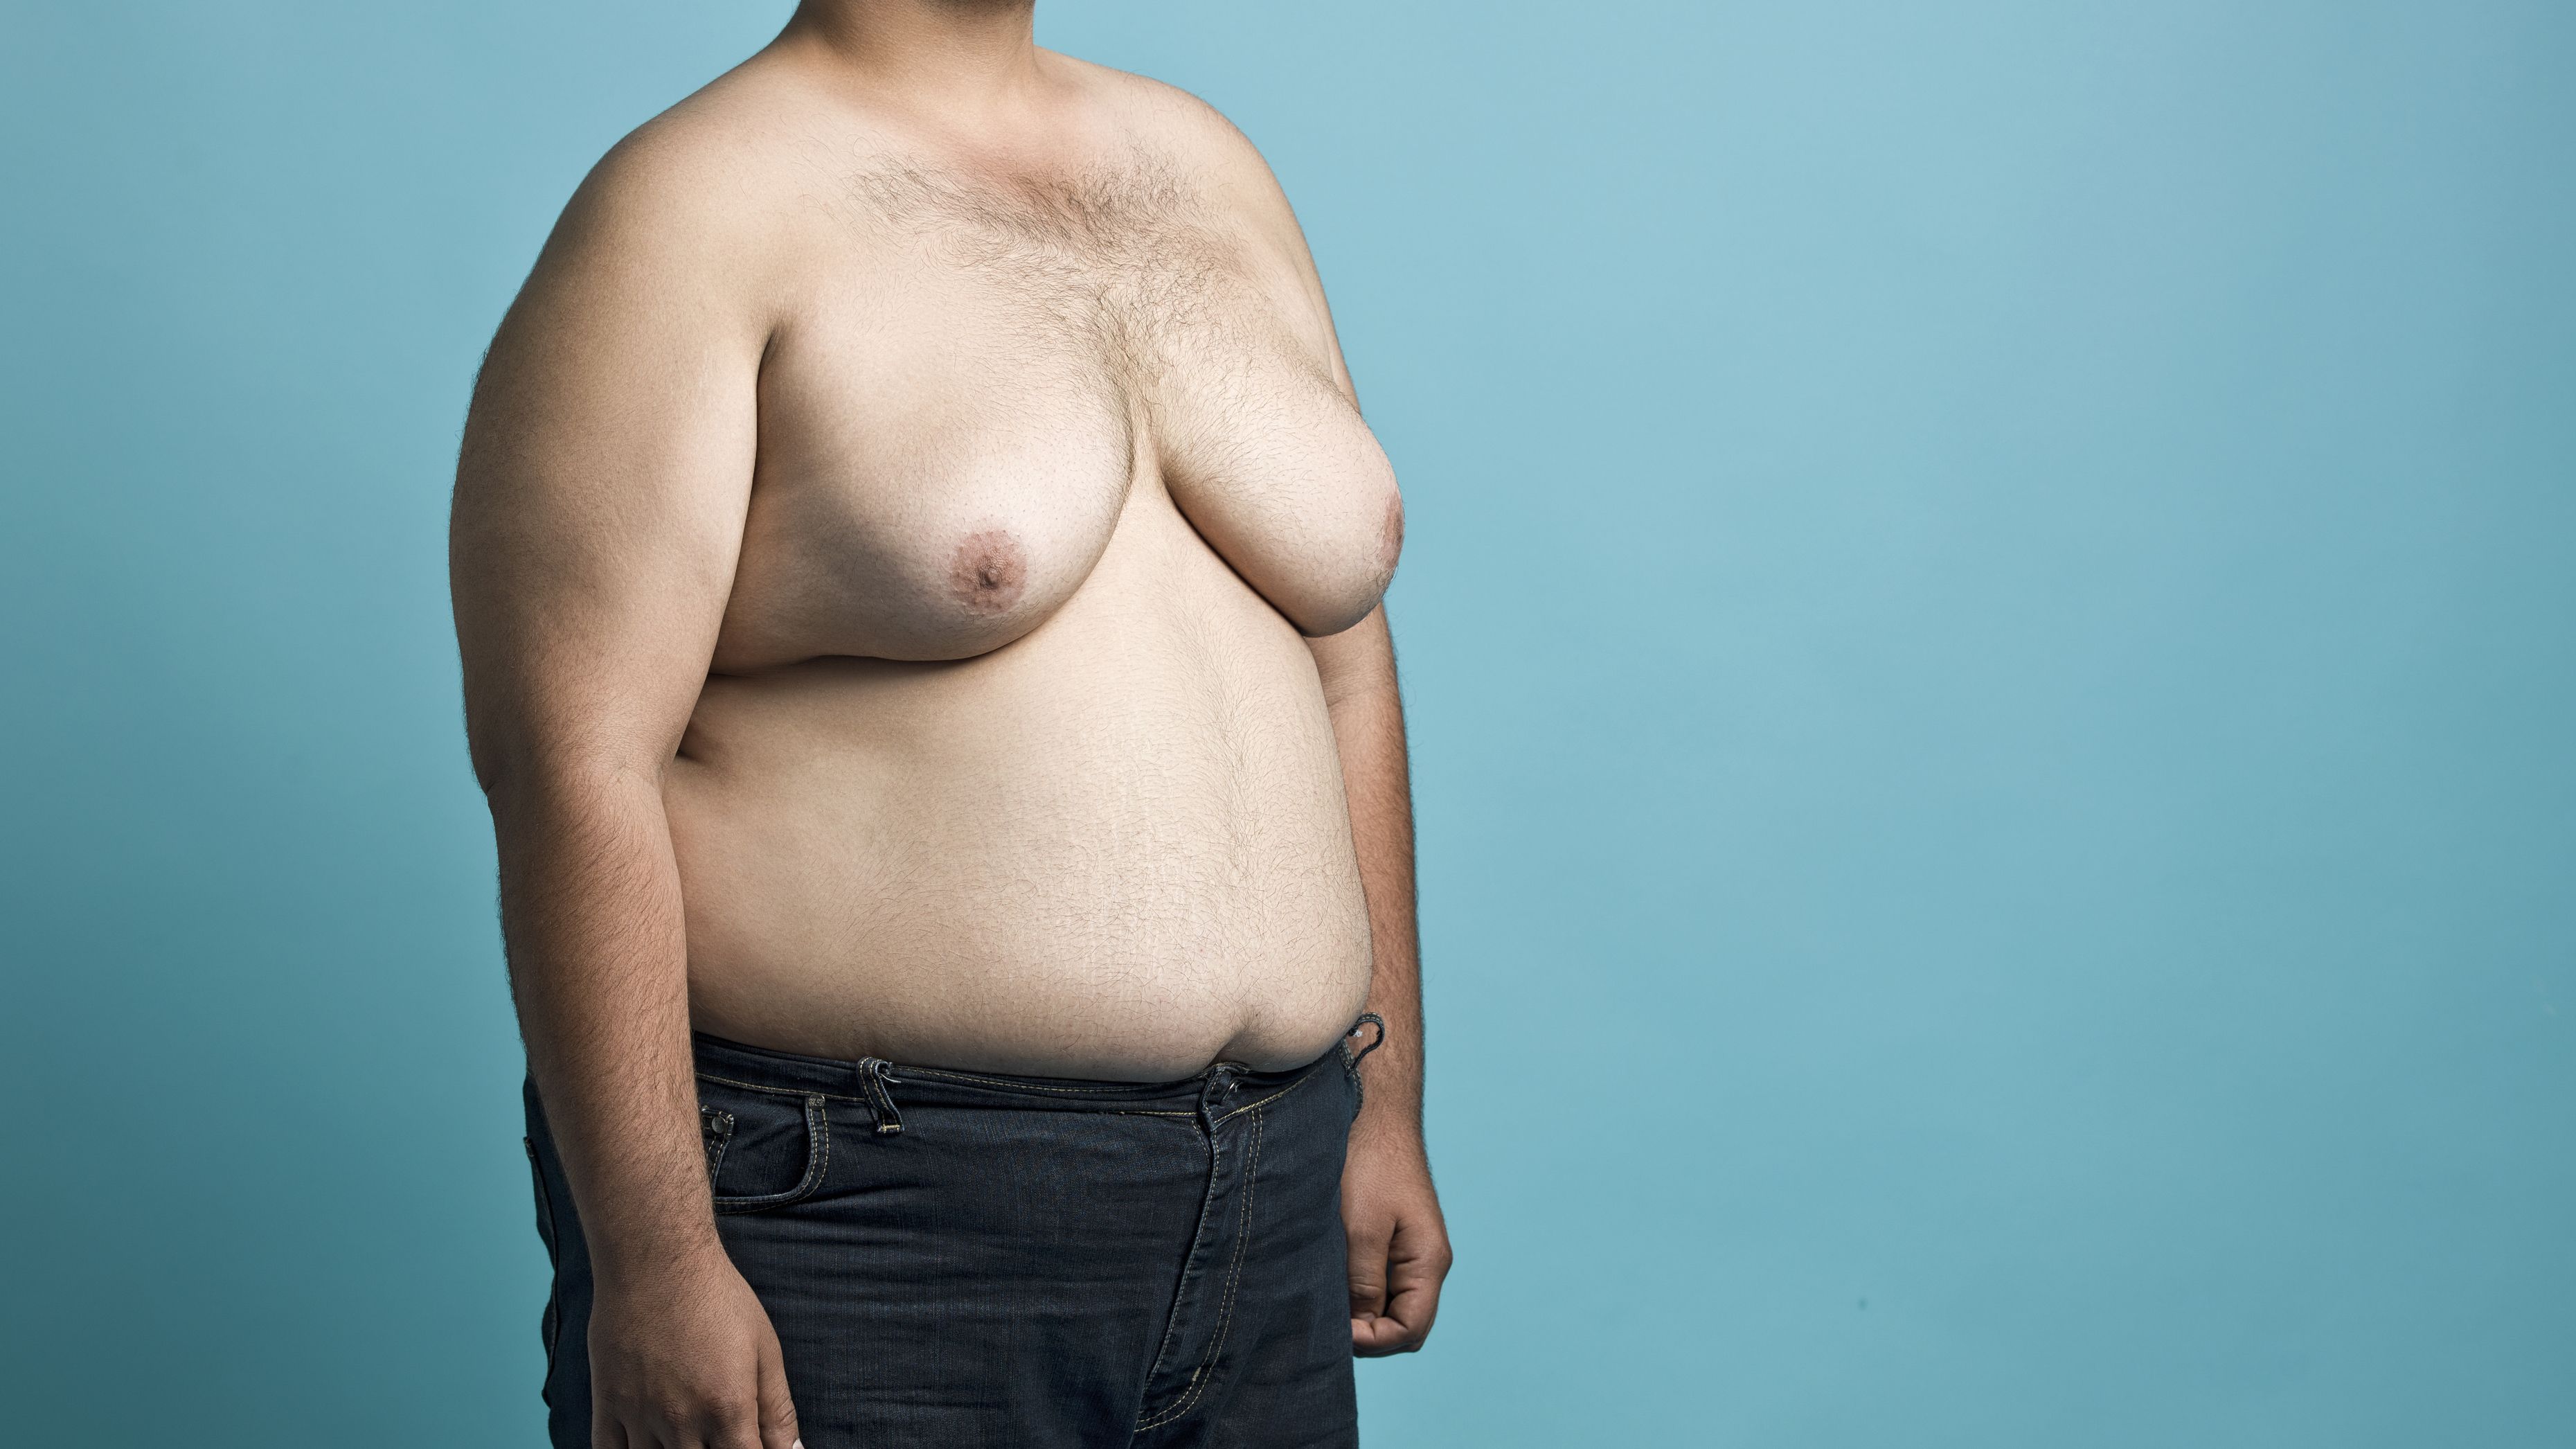 belinda goosen recommends fat woman small tits pic